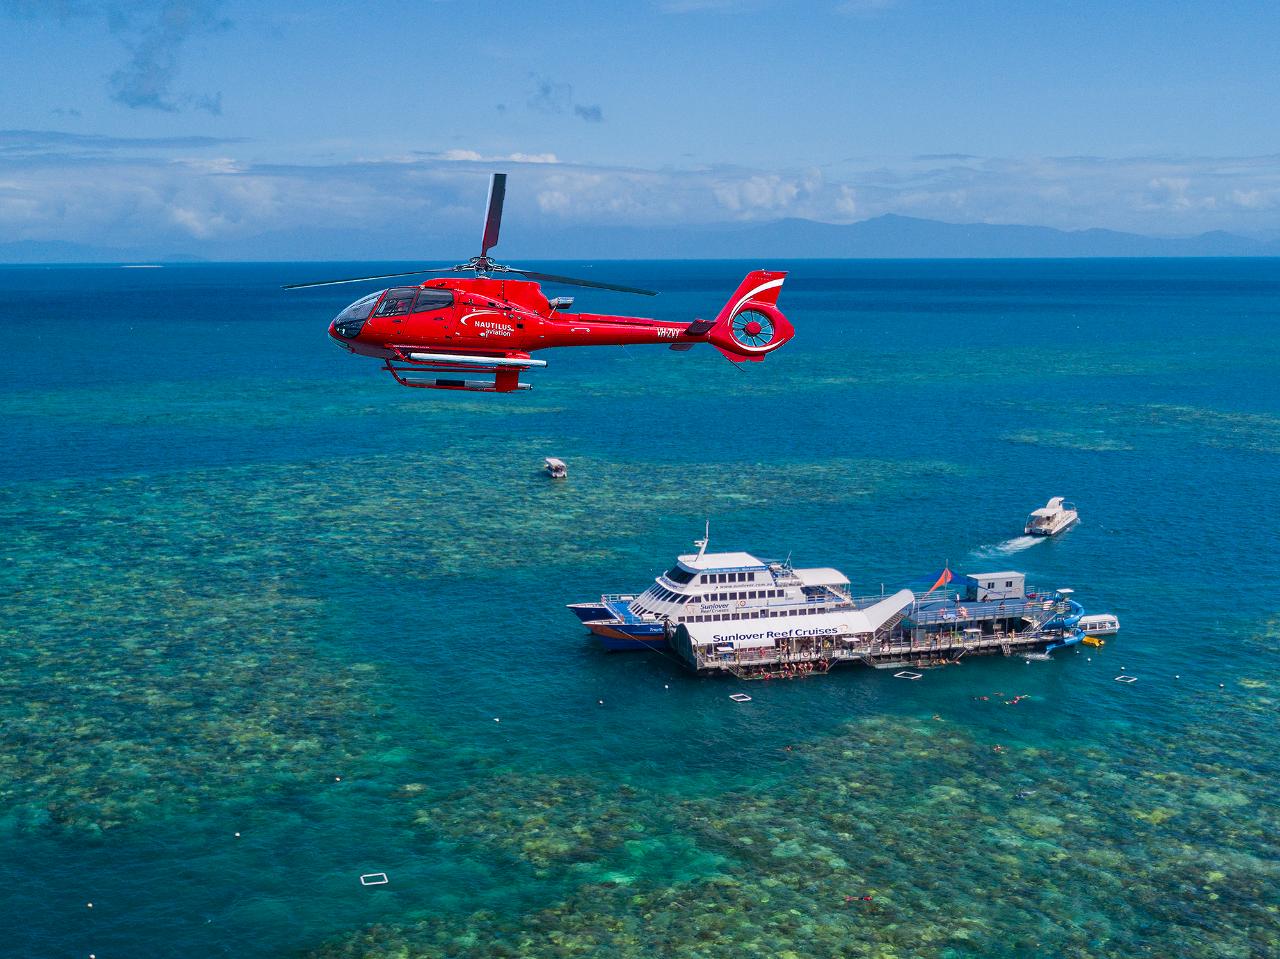 07: Moore Reef | Departs Cairns on Catamaran, Returns to Cairns on Heli